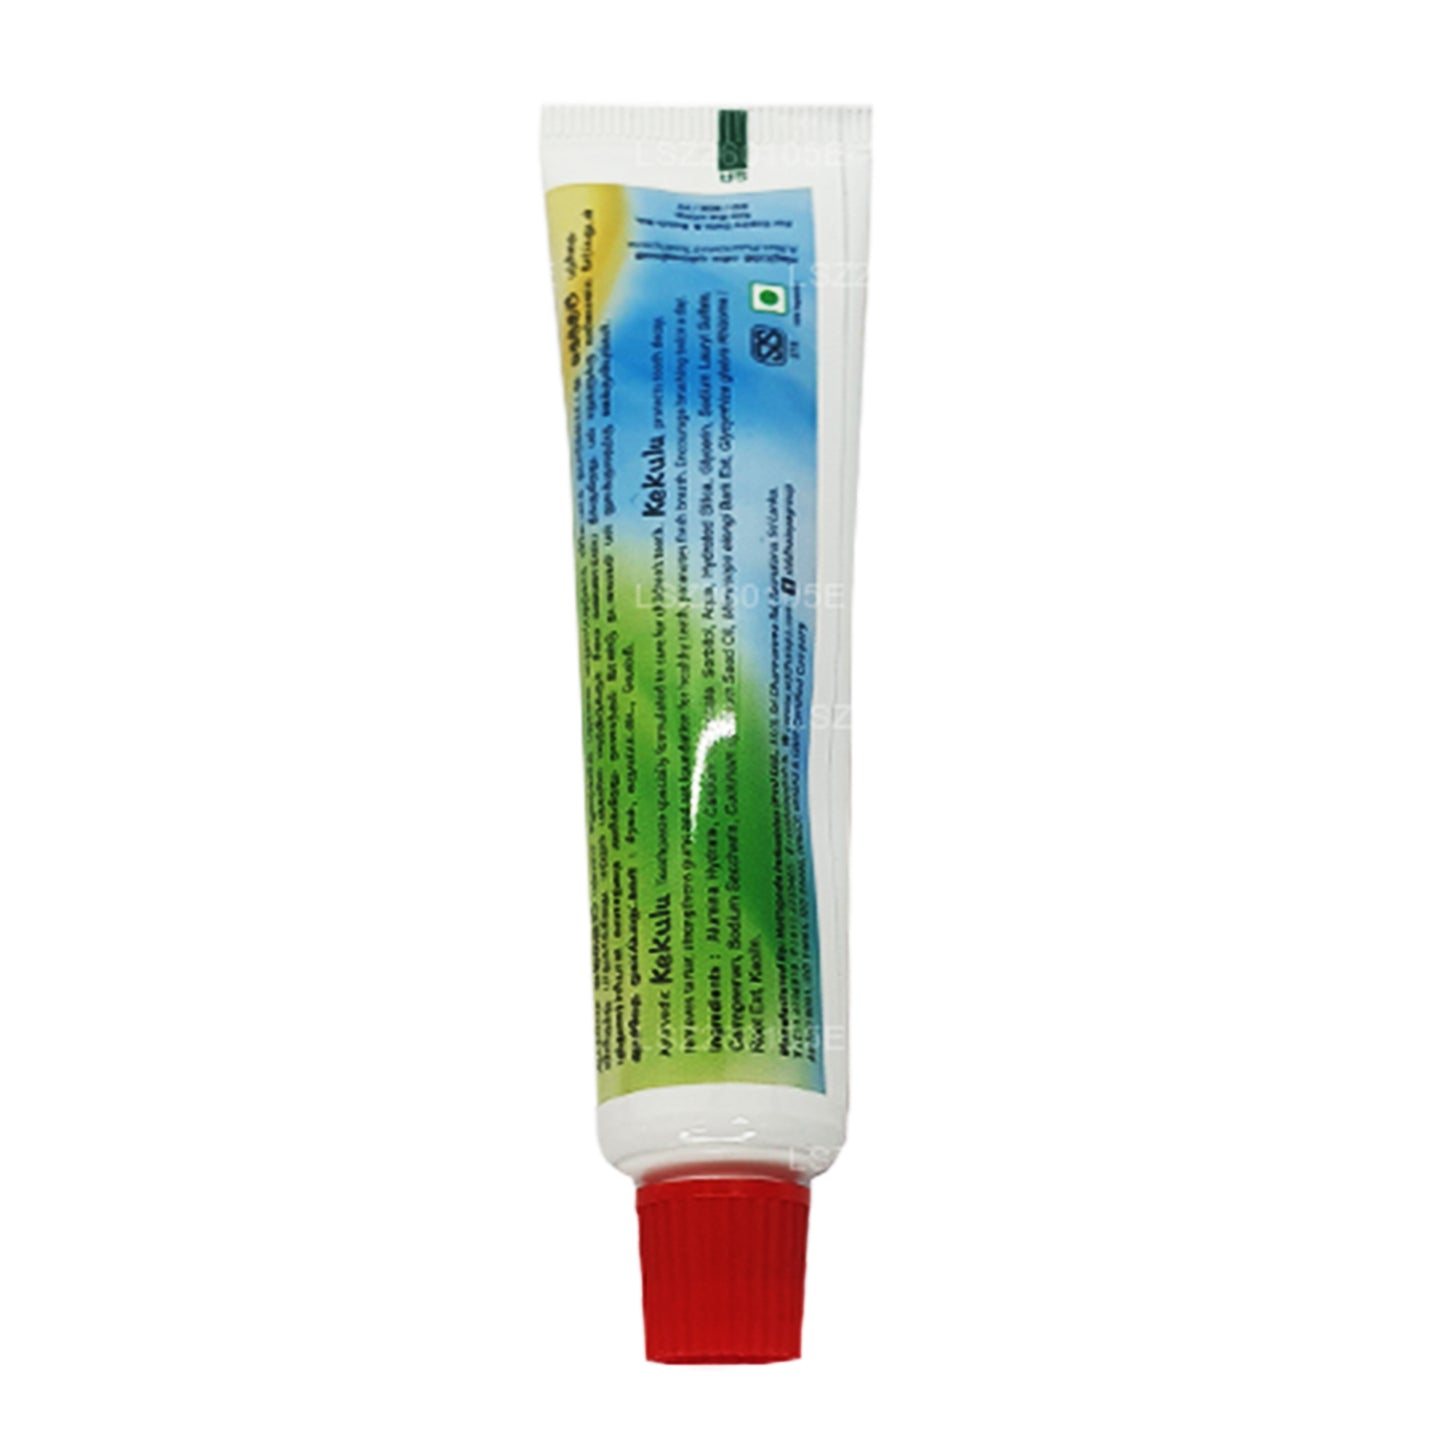 Siddhalepa Kekulu tandpasta (40 g)